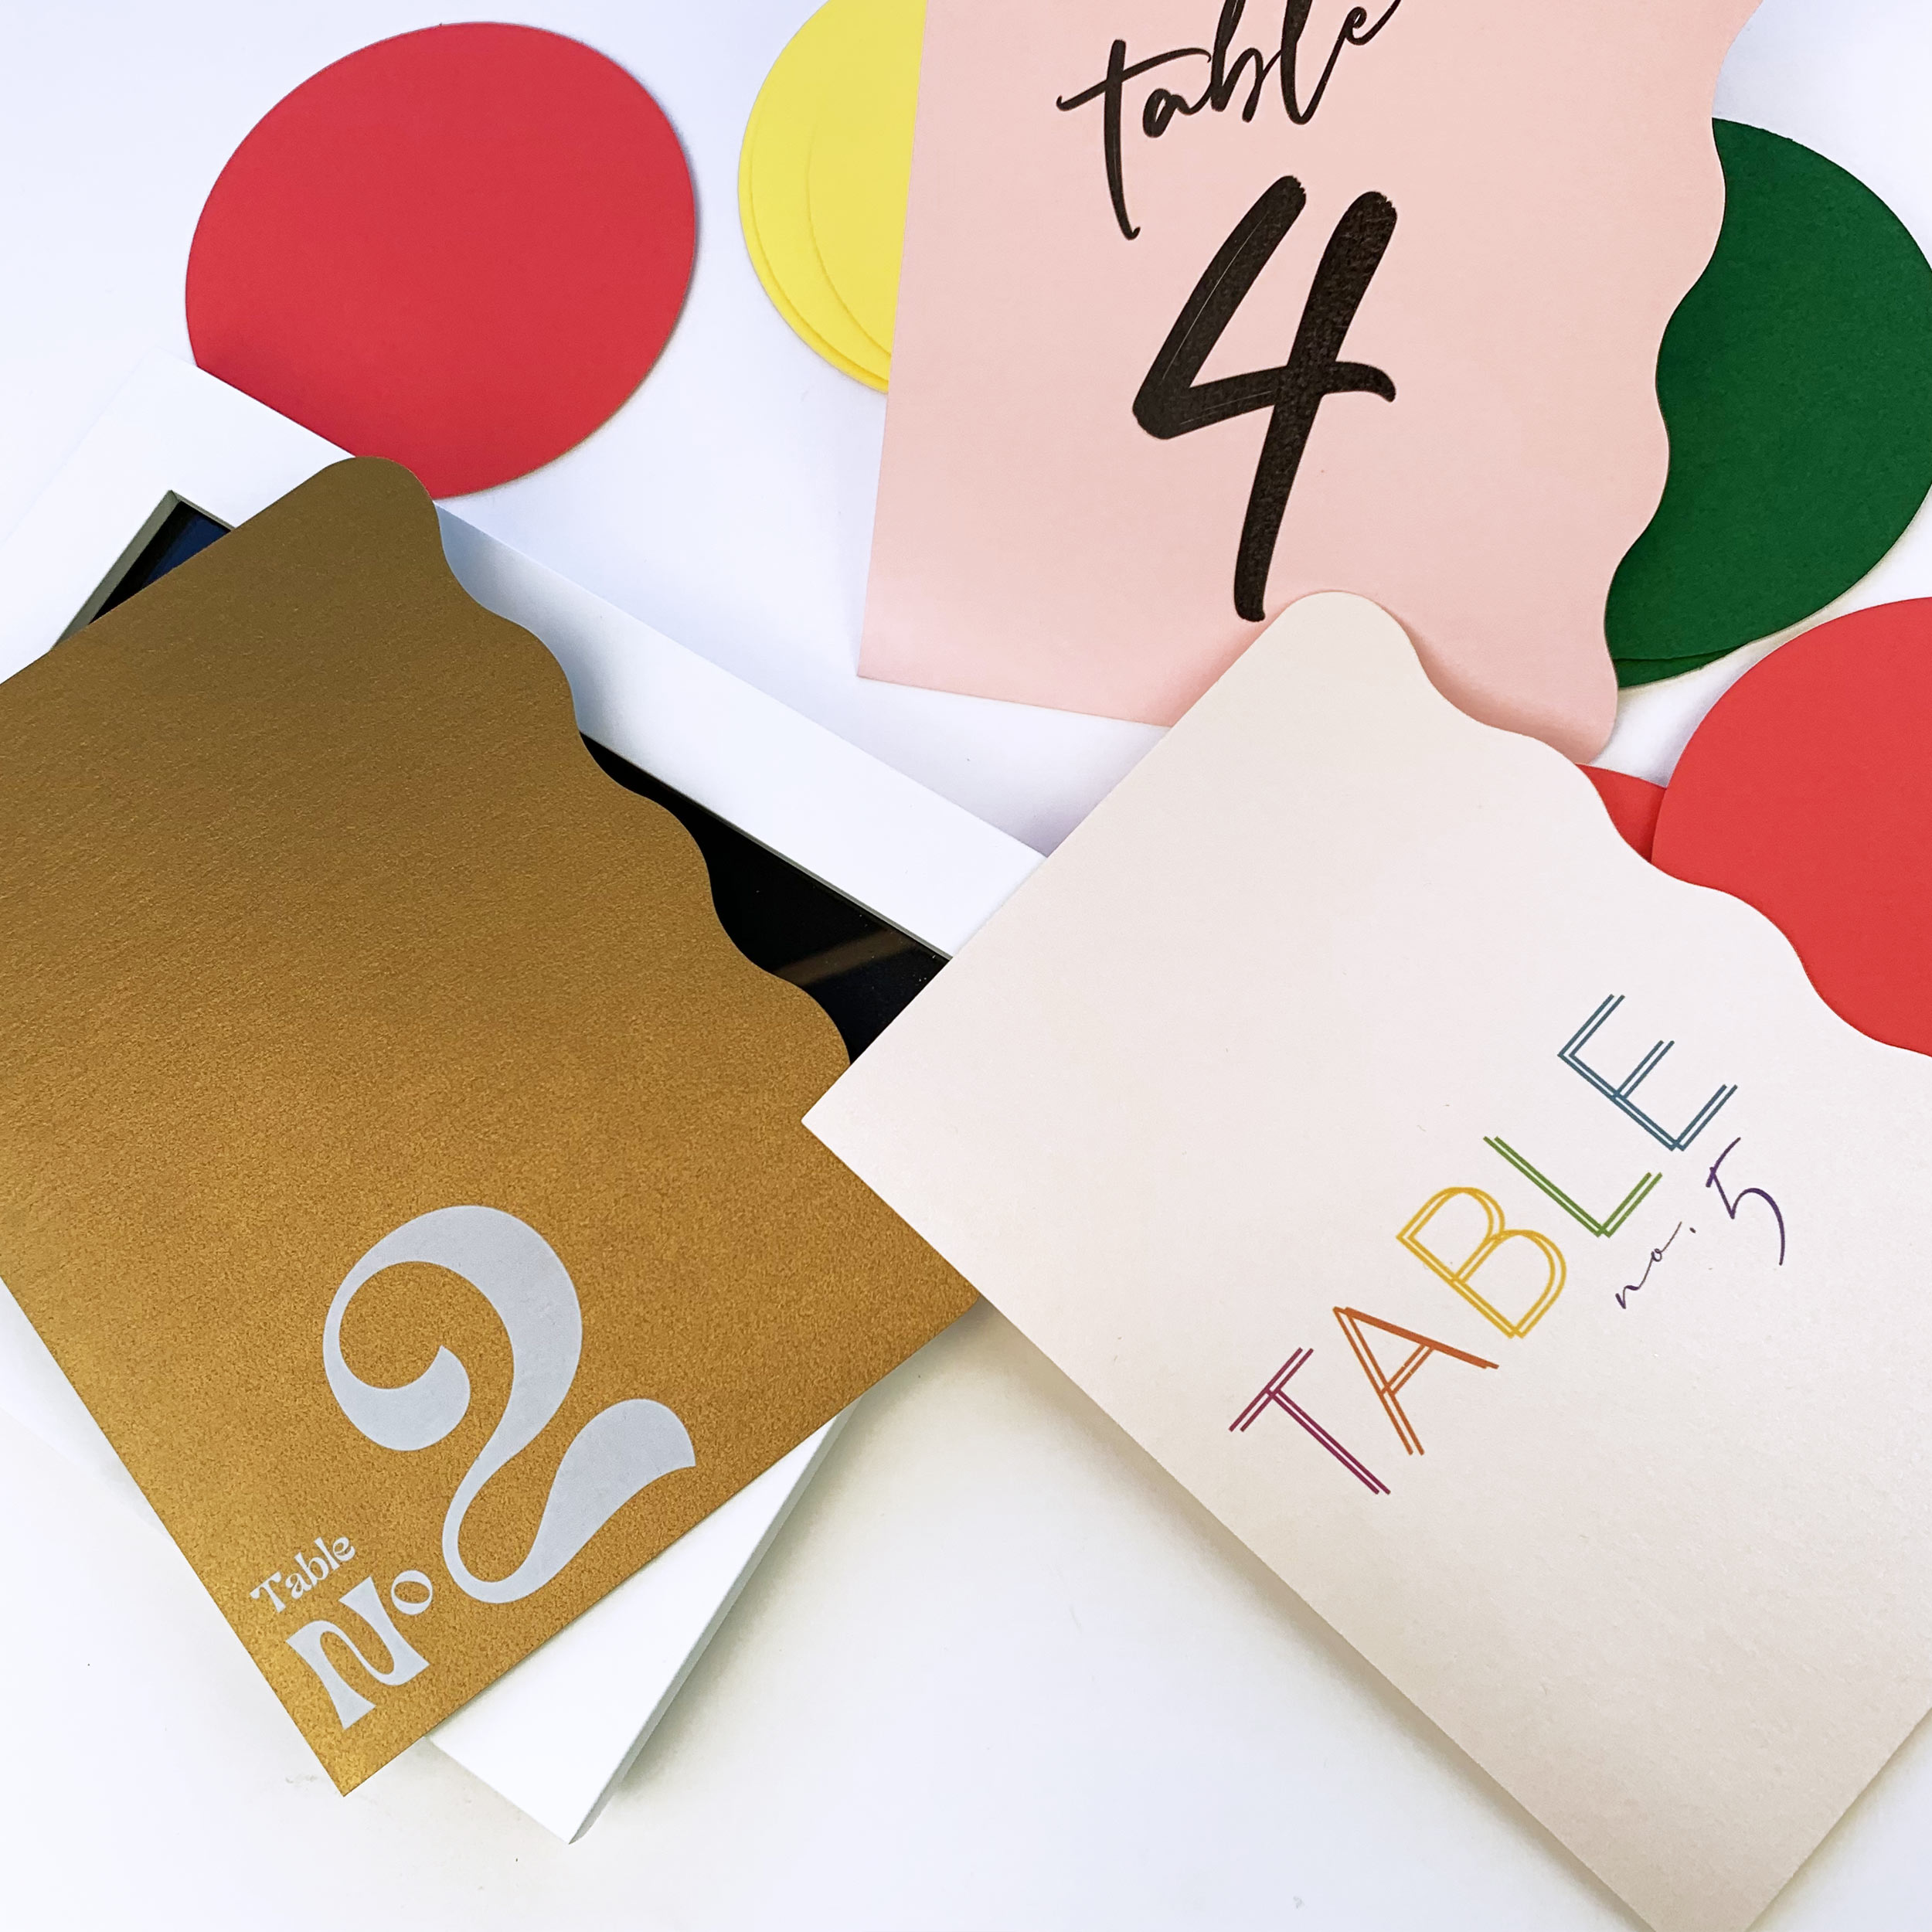 Sage Arch Shaped Card - A7 Gmund Colors Matt 5 x 7 111C - LCI Paper